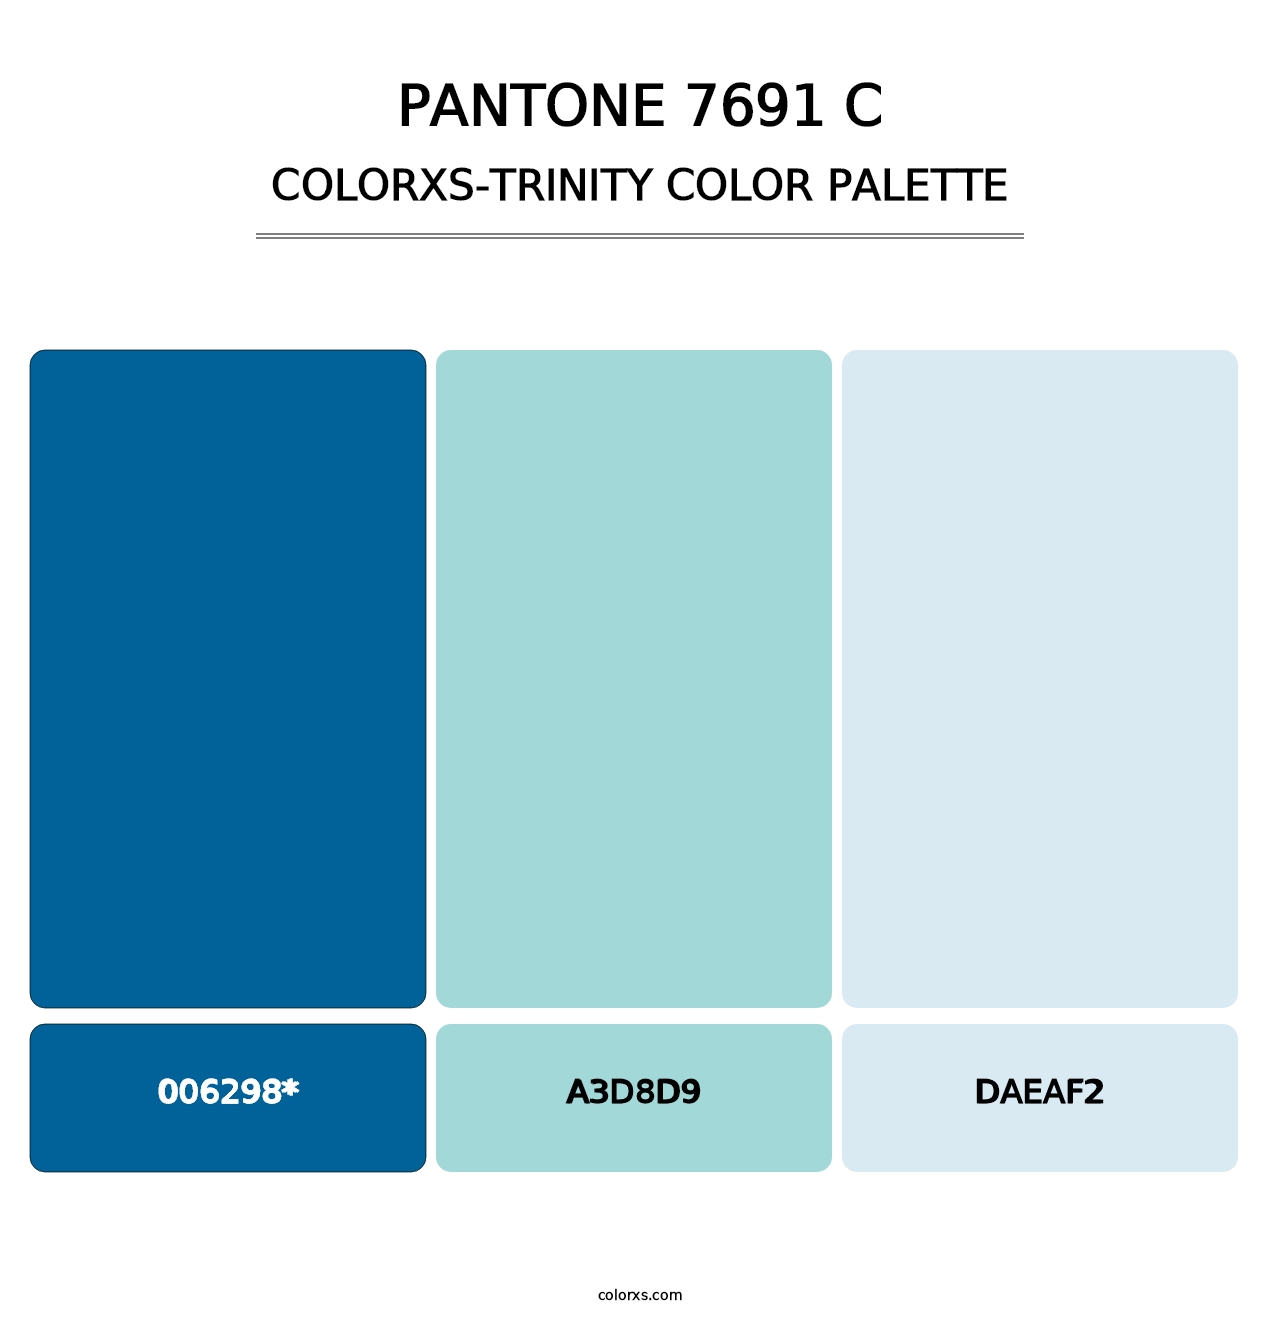 PANTONE 7691 C - Colorxs Trinity Palette